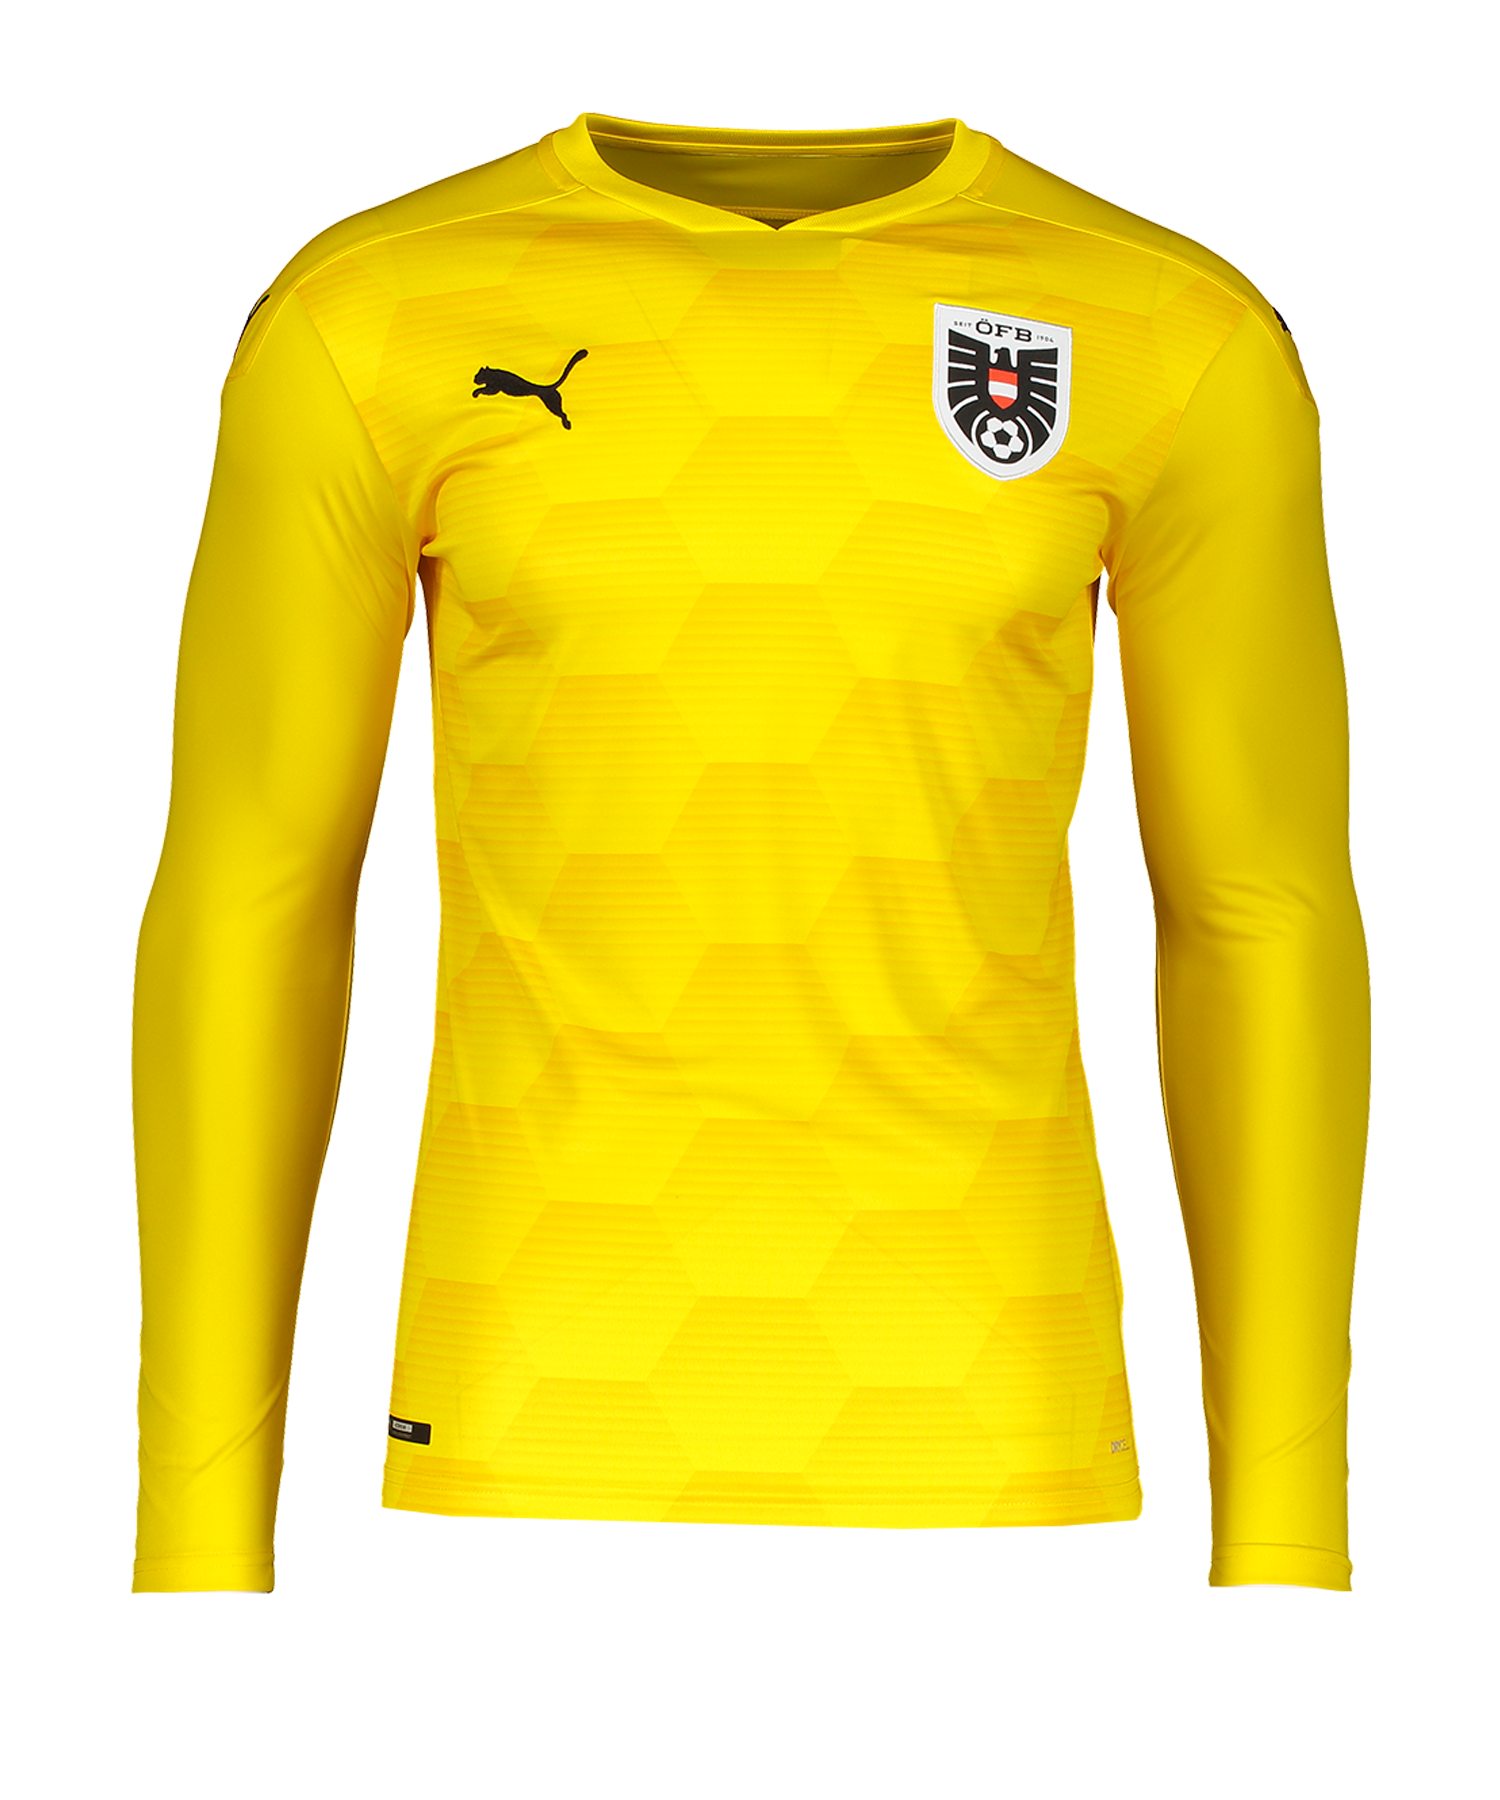 Long-sleeve Jersey Puma Austria em 2020